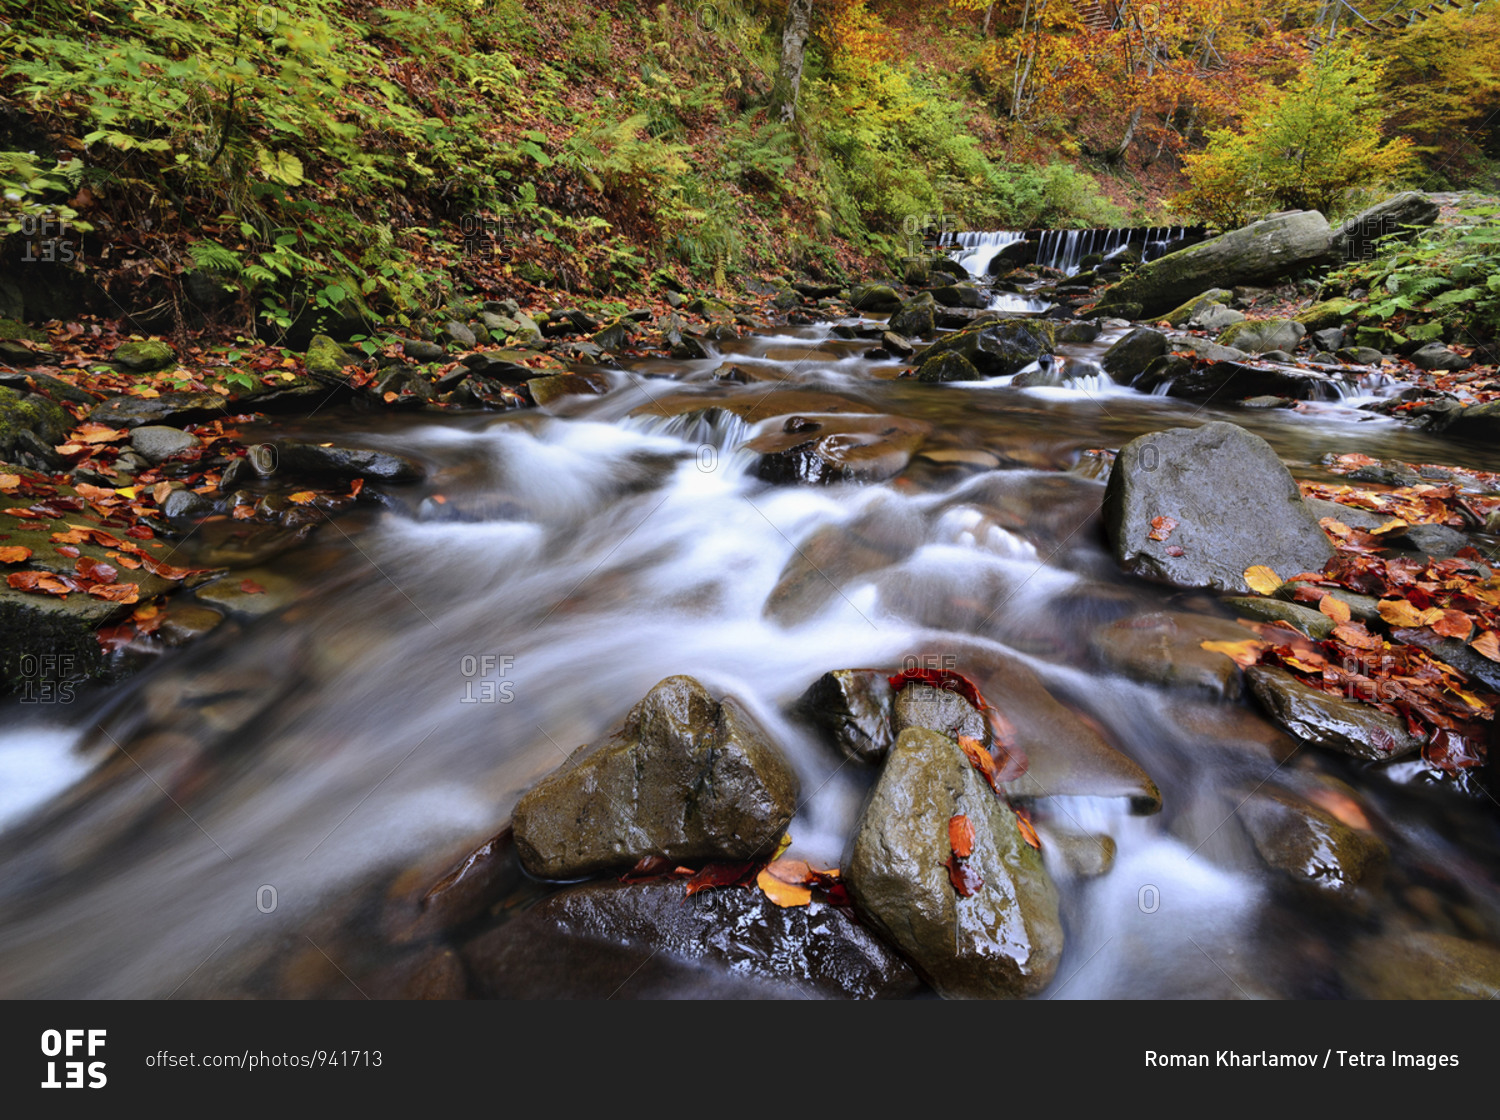 Ukraine, Zakarpattia region, Carpathians, Verkhniy Shypot
waterfall, Blurred waterfall in autumn scenery stock photo -
OFFSET